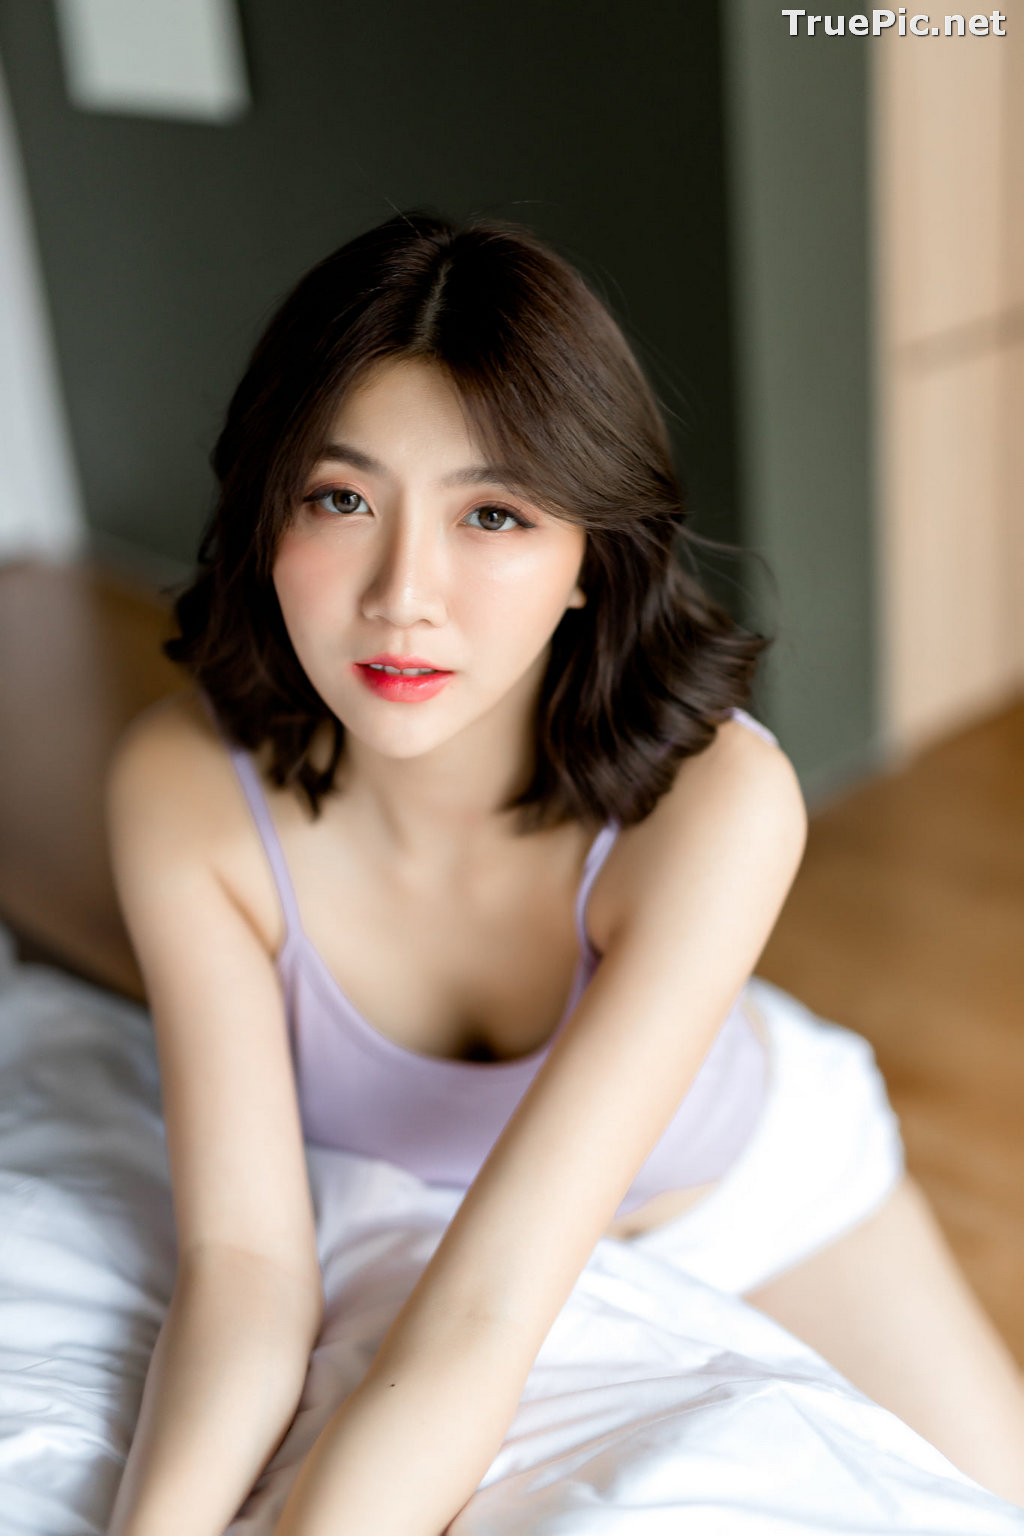 Image Thailand Model - Sasi Ngiunwan - Beautiful Girl Woke Up - TruePic.net - Picture-22